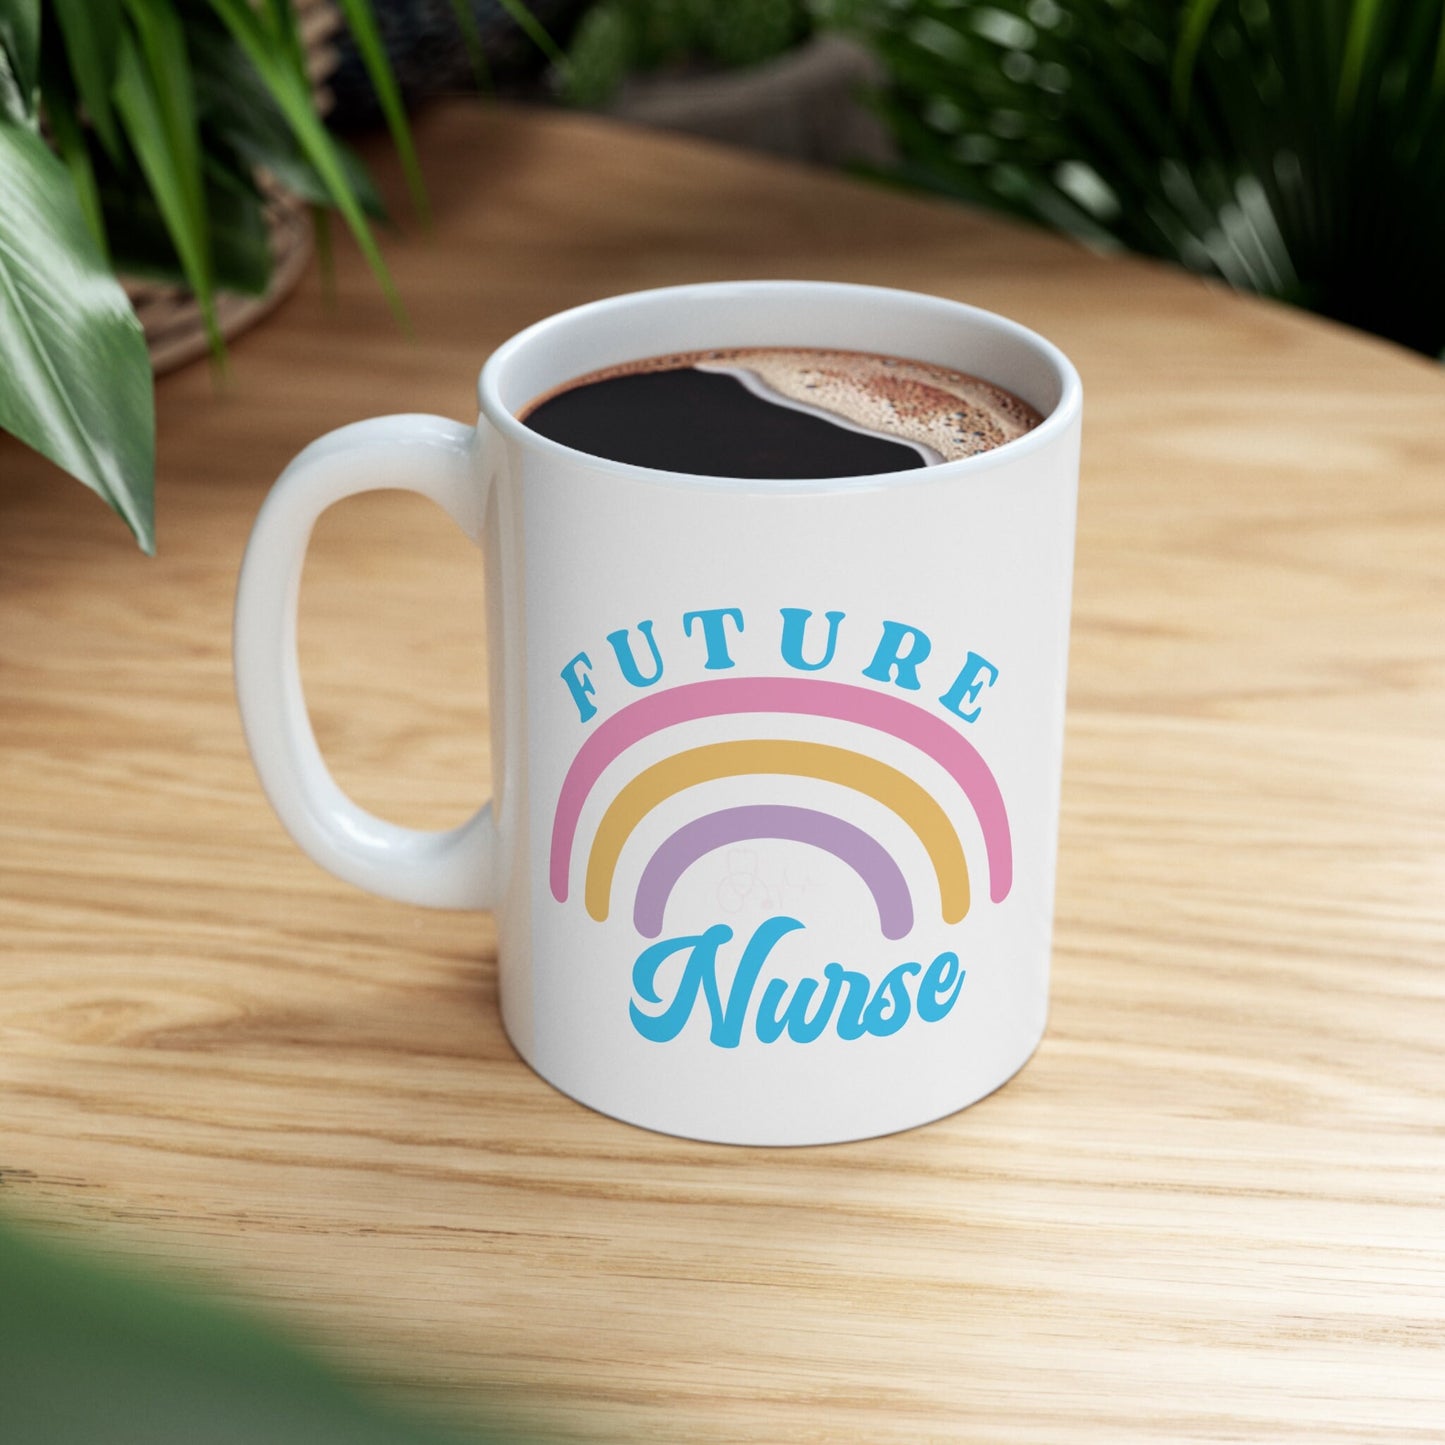 Future Nurse rainbow Nursing Mug, I love nurse Mug, Awesome gift Mug for nurses, gift Mug for a special nurse, Thank you gift Mug for nurses